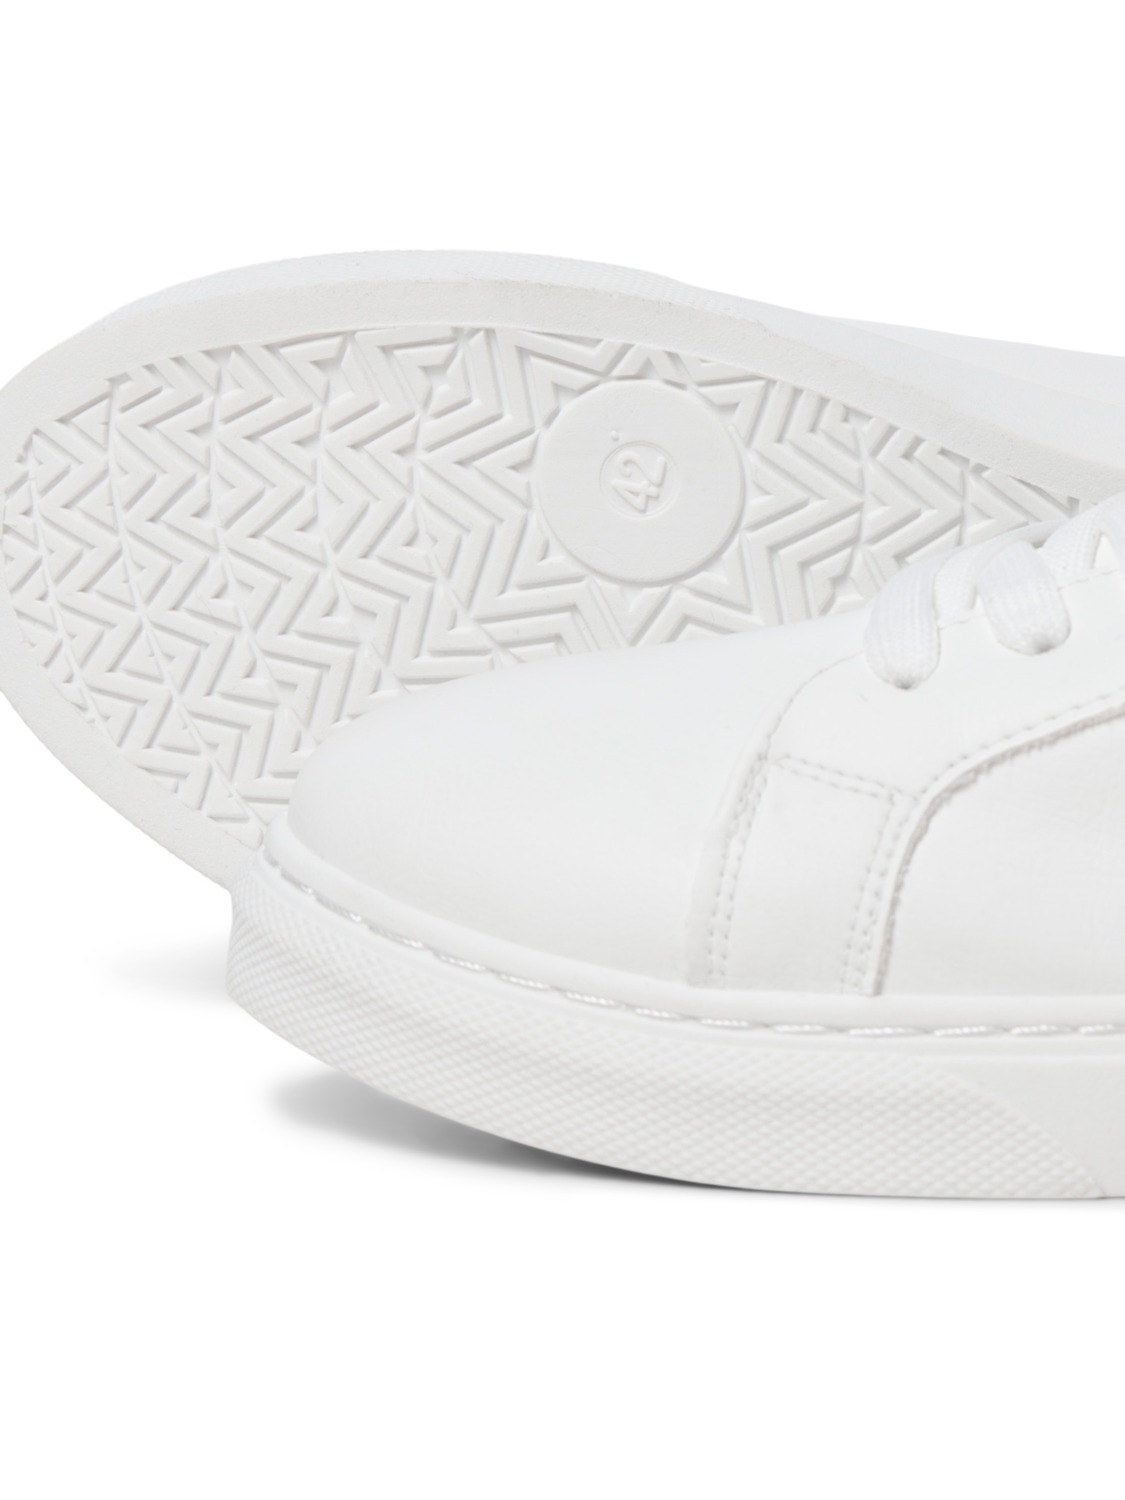 Jack & Jones Polyurethane Sneaker -Bright White - 12254115